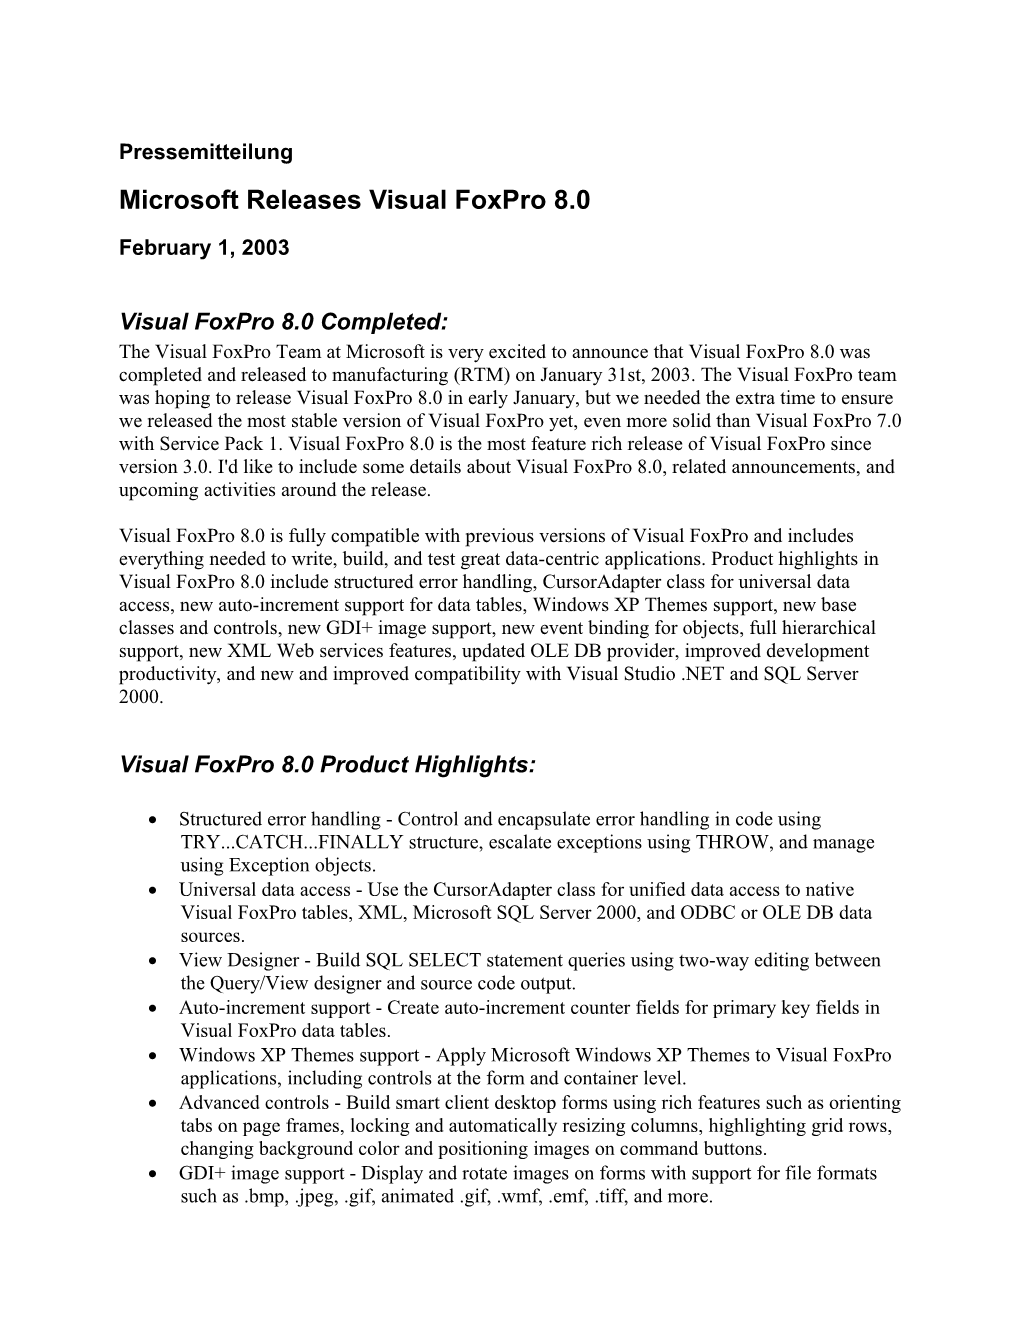 Microsoft Release Visual Foxpro 8.0